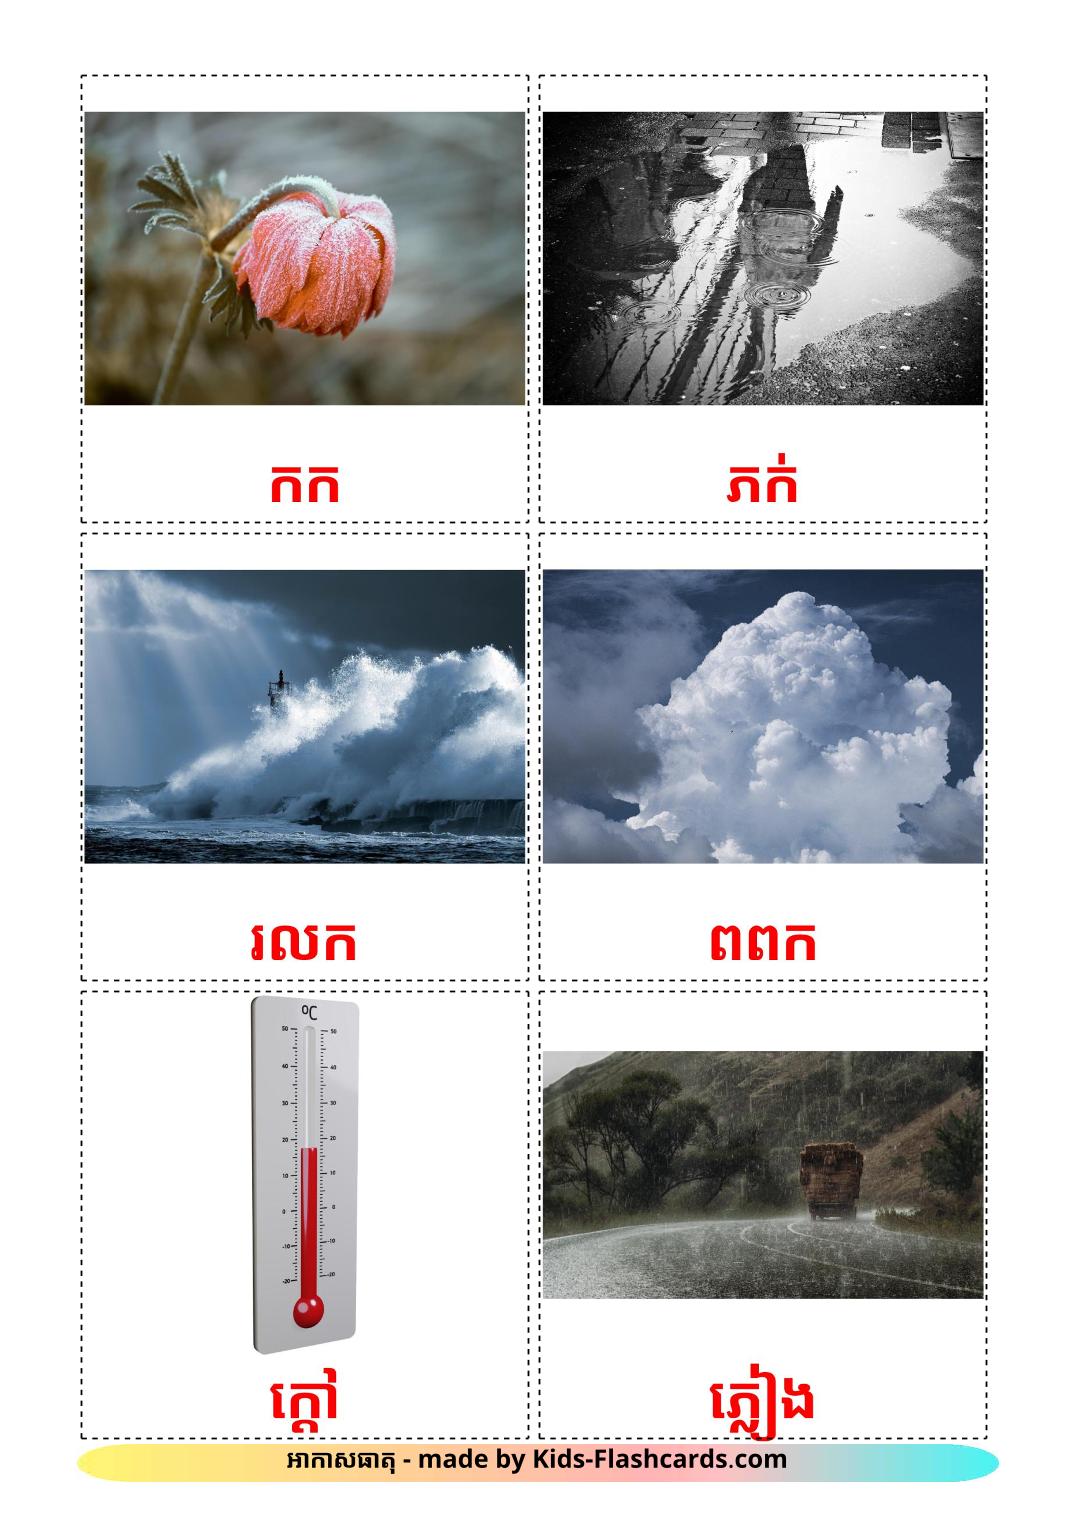 Tempo atmosferico - 31 flashcards khmer stampabili gratuitamente